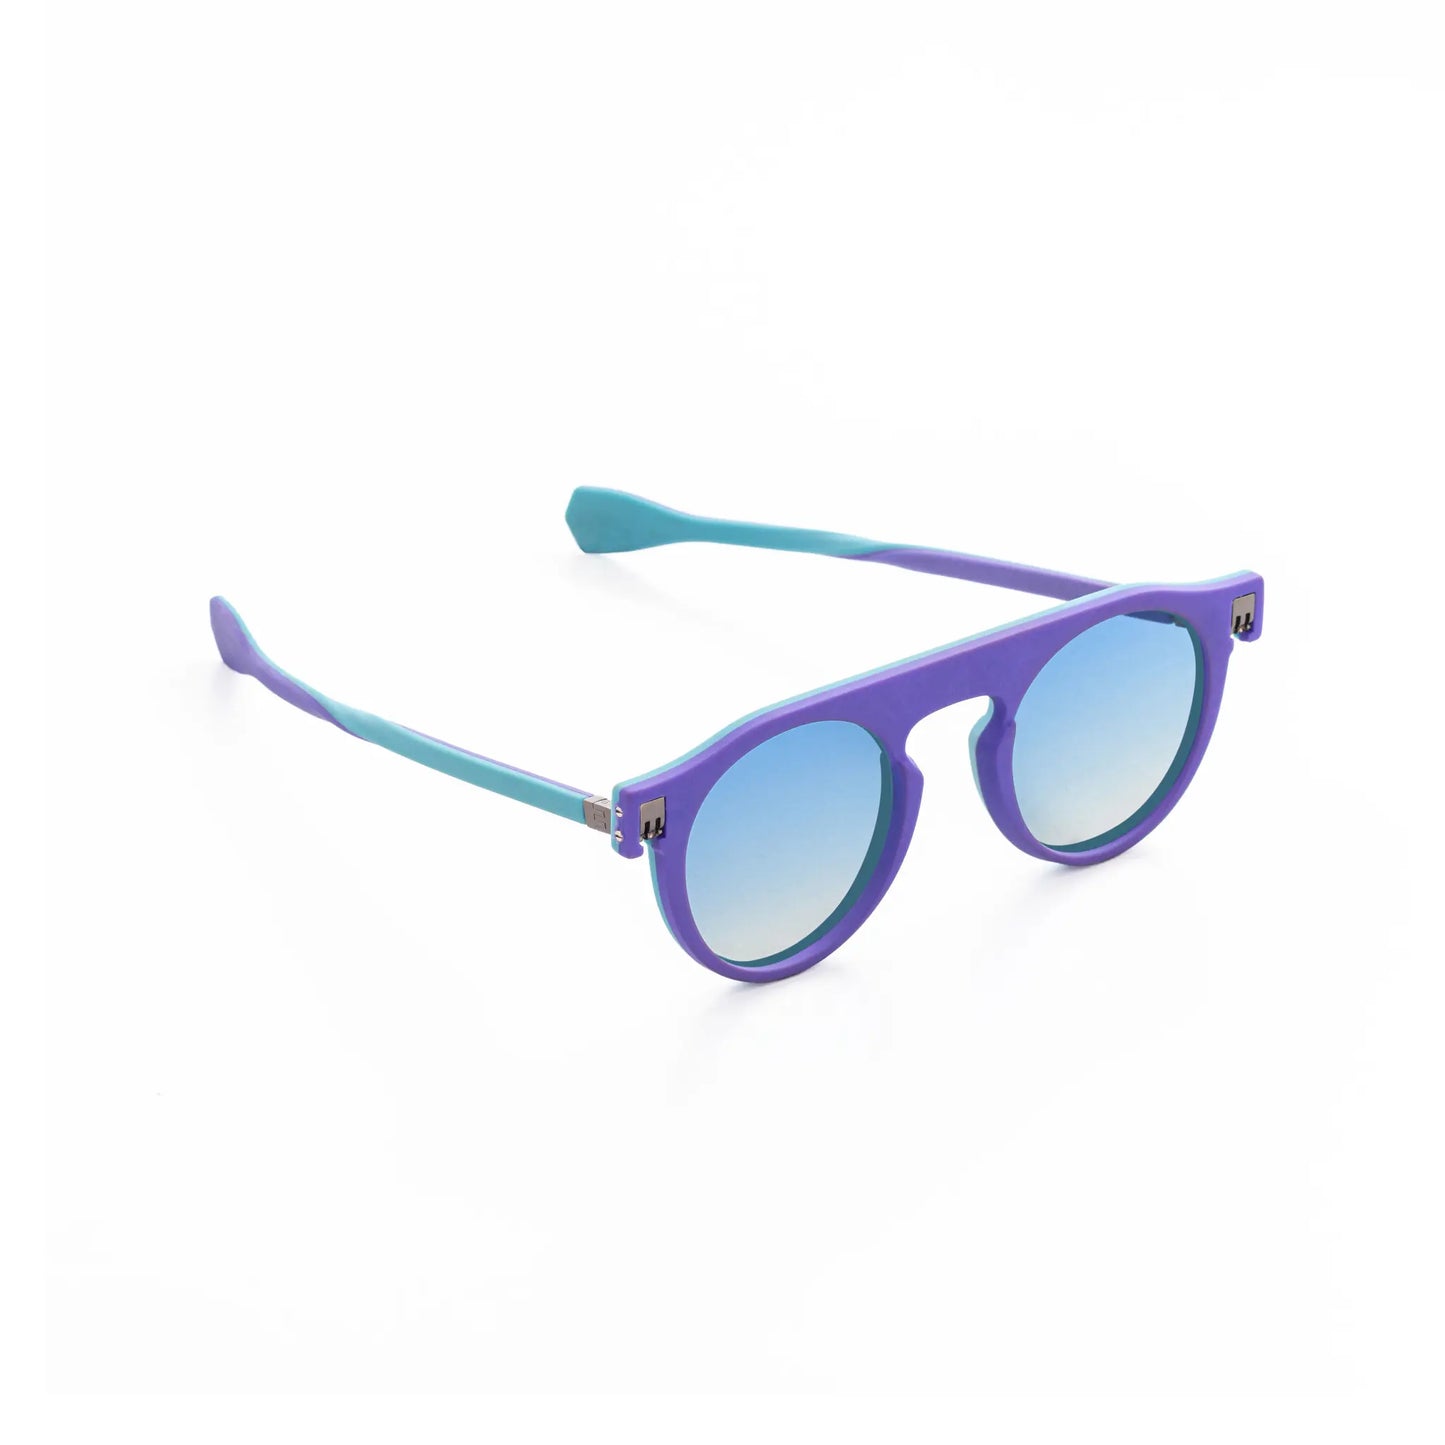 Reverso sunglasses Light Blue & purple reversible & ultra light side view 1